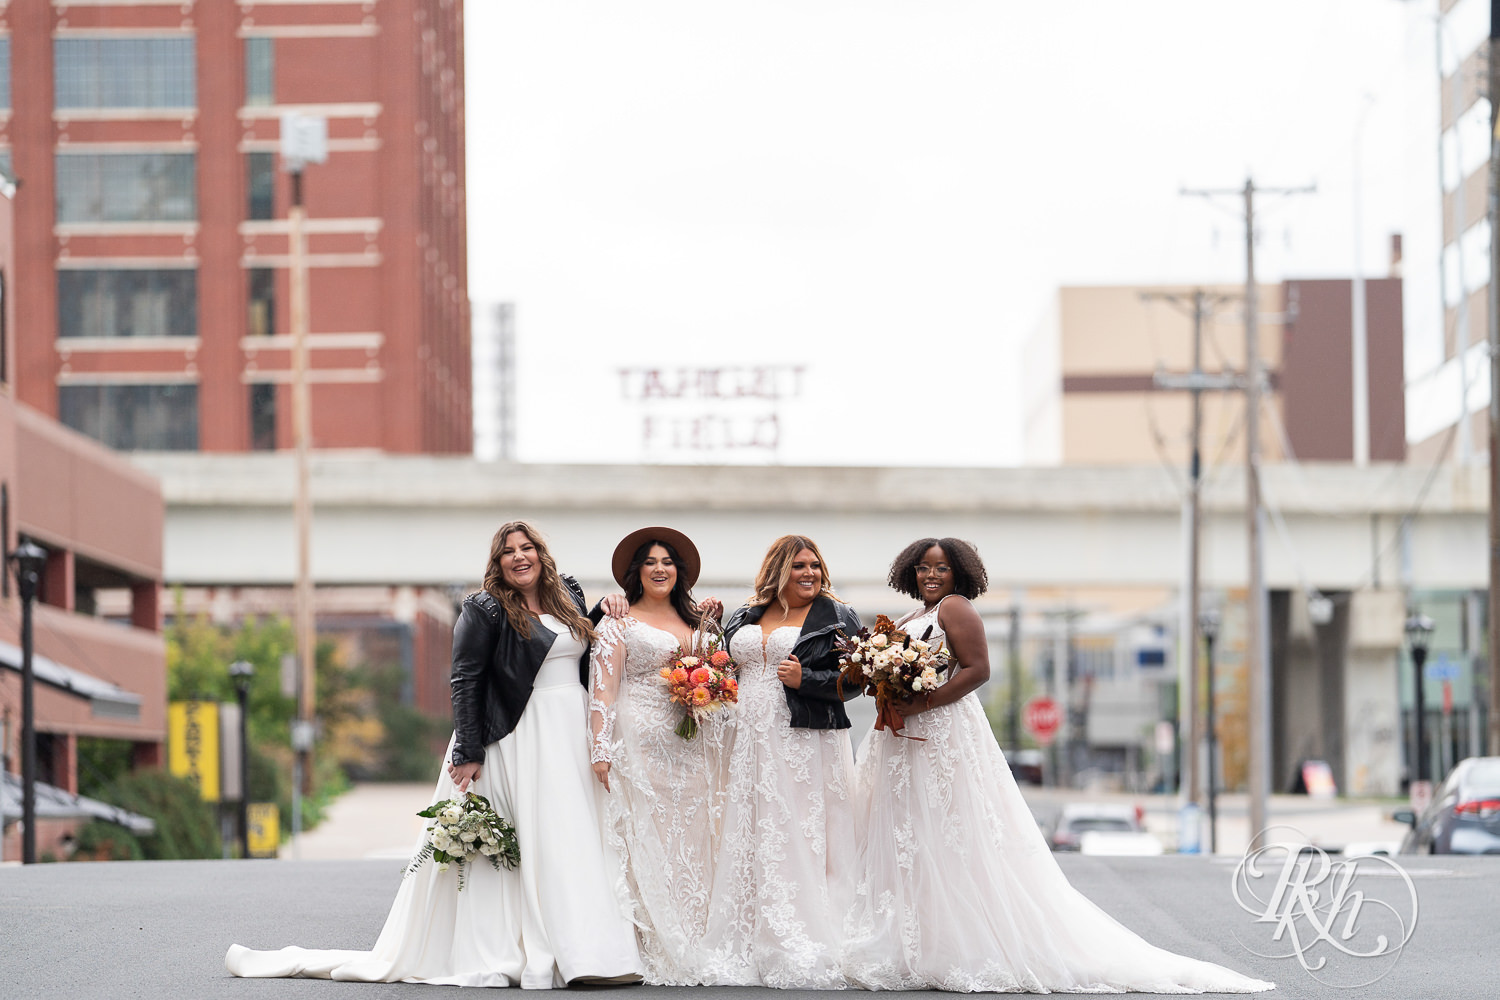 Plus size brides smiling in wedding dresses in Minneapolis, Minnesota.